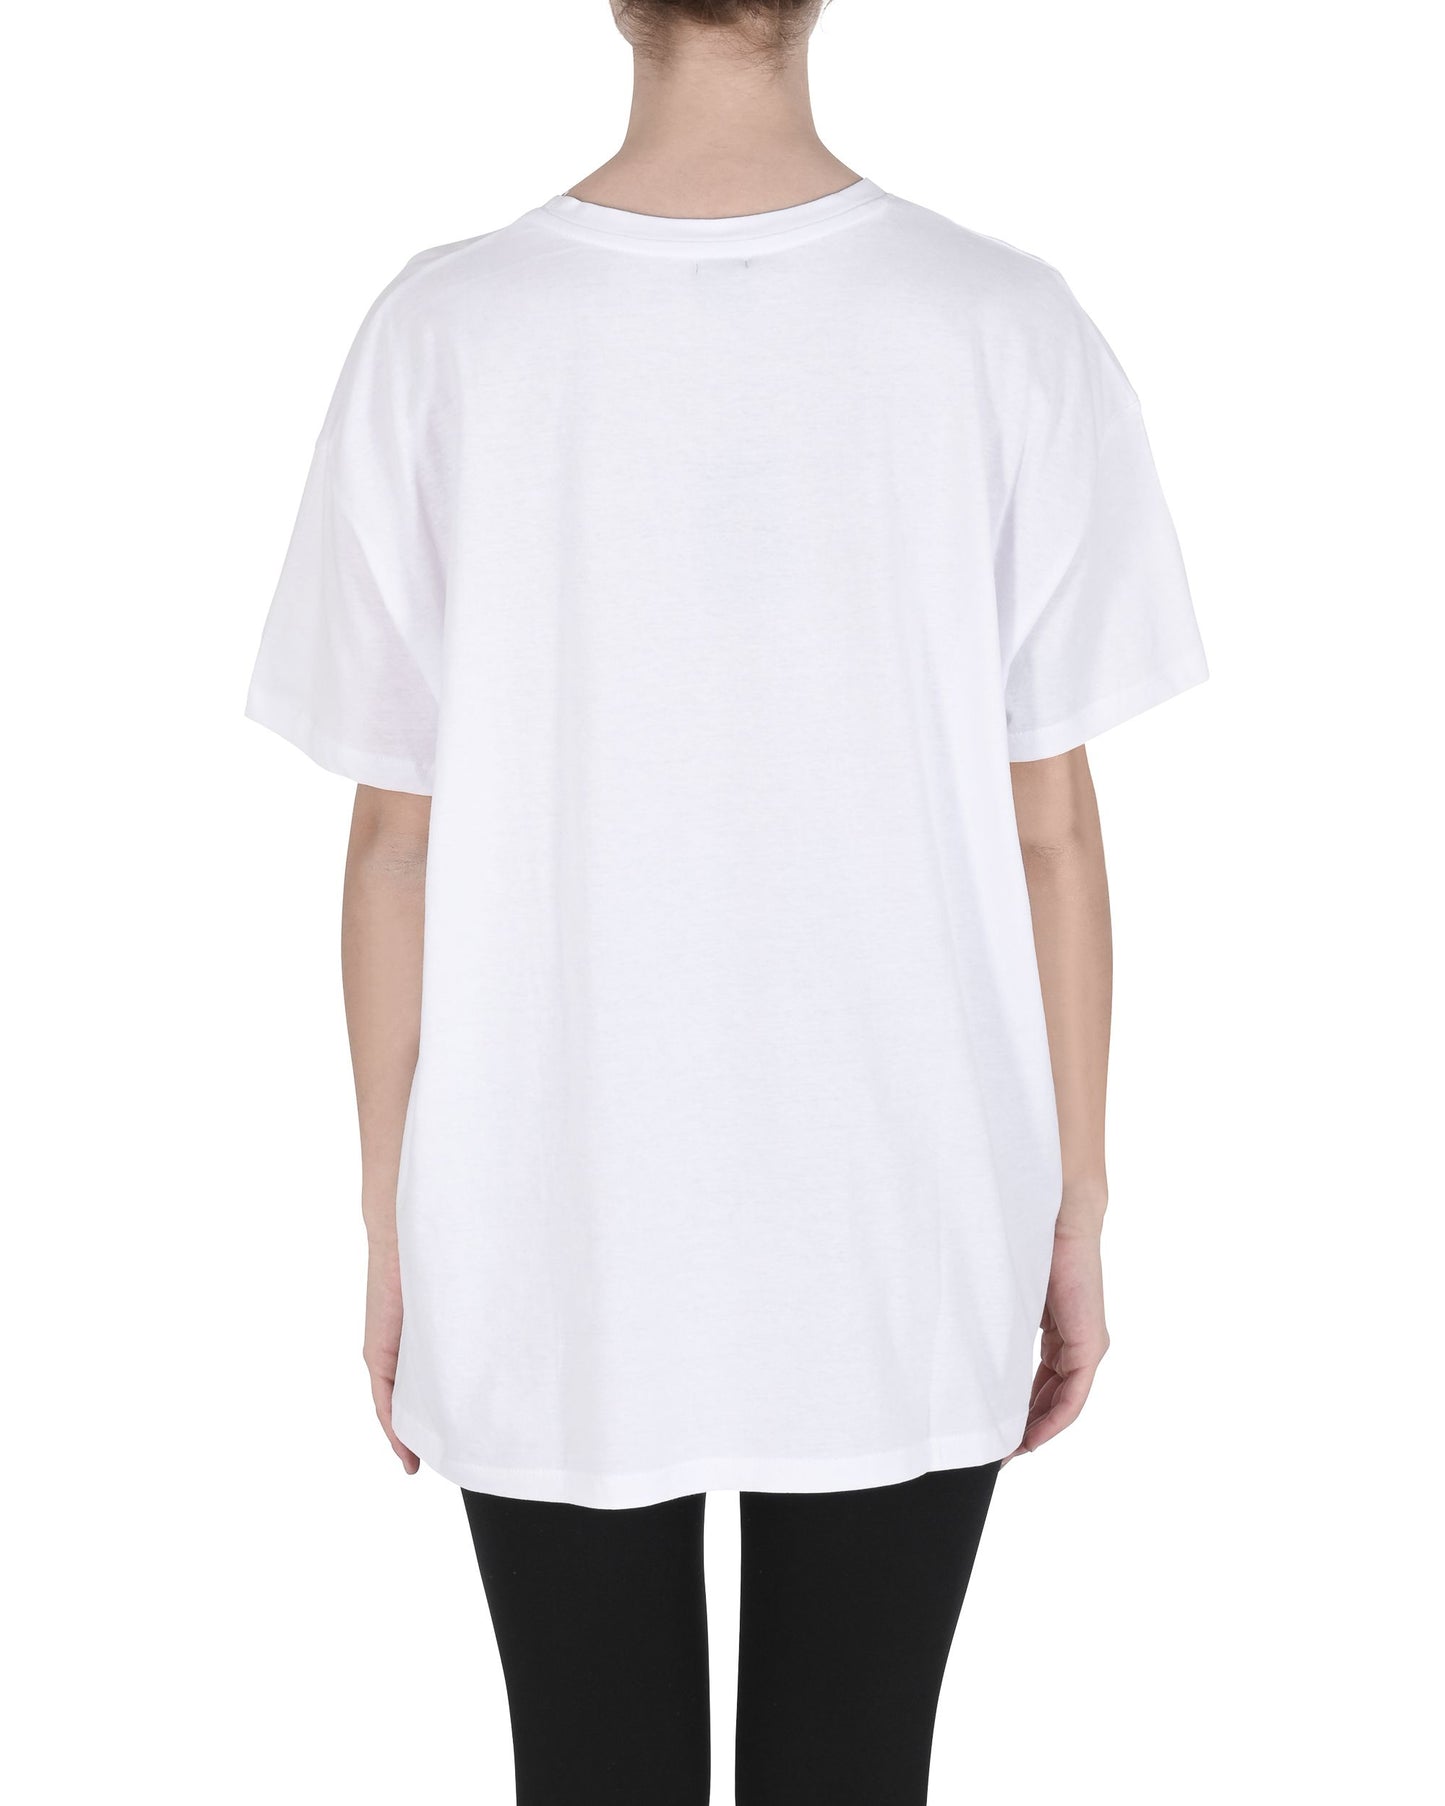 19V69 Italia Womens T-Shirt NOW IS GOOD WHITE